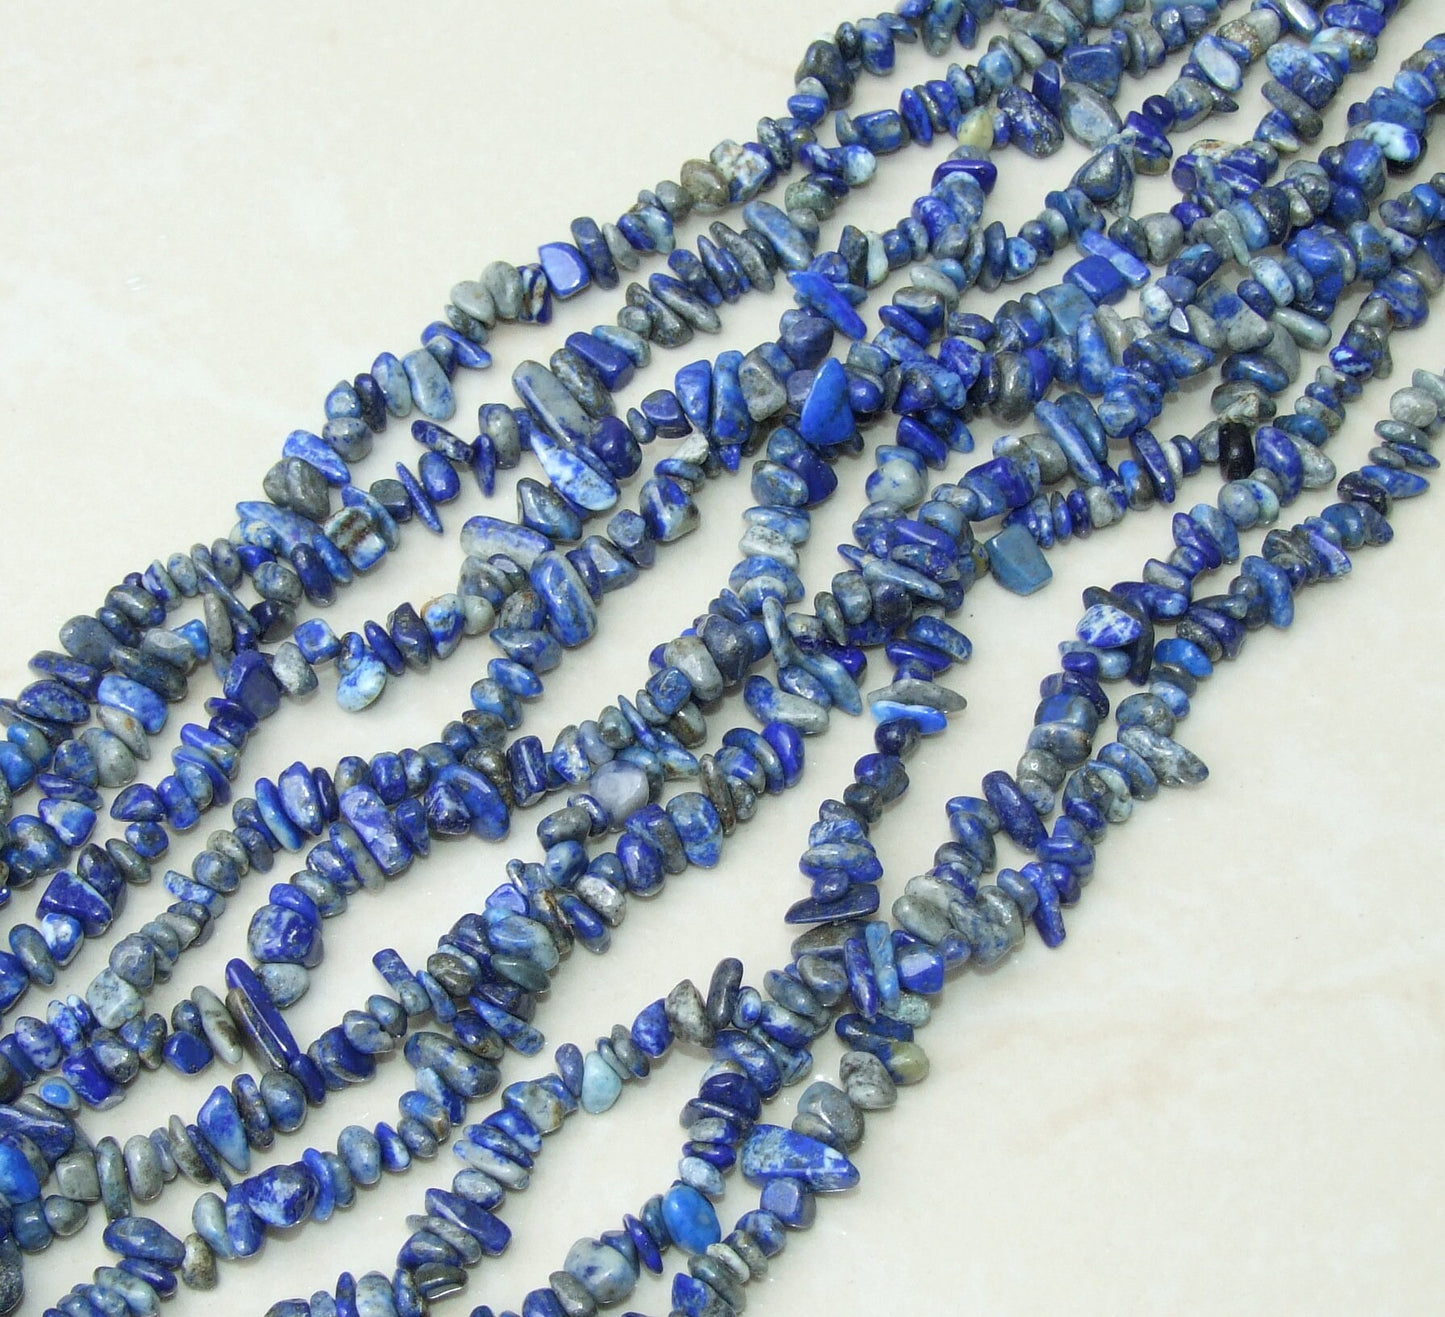 Small Lapis Chips, Polished Lapis Beads, Gemstone Beads, Jewelry Stones, Natural Lapis, Lapis Lazuli, 31.5" Strand, 5mm - 8mm